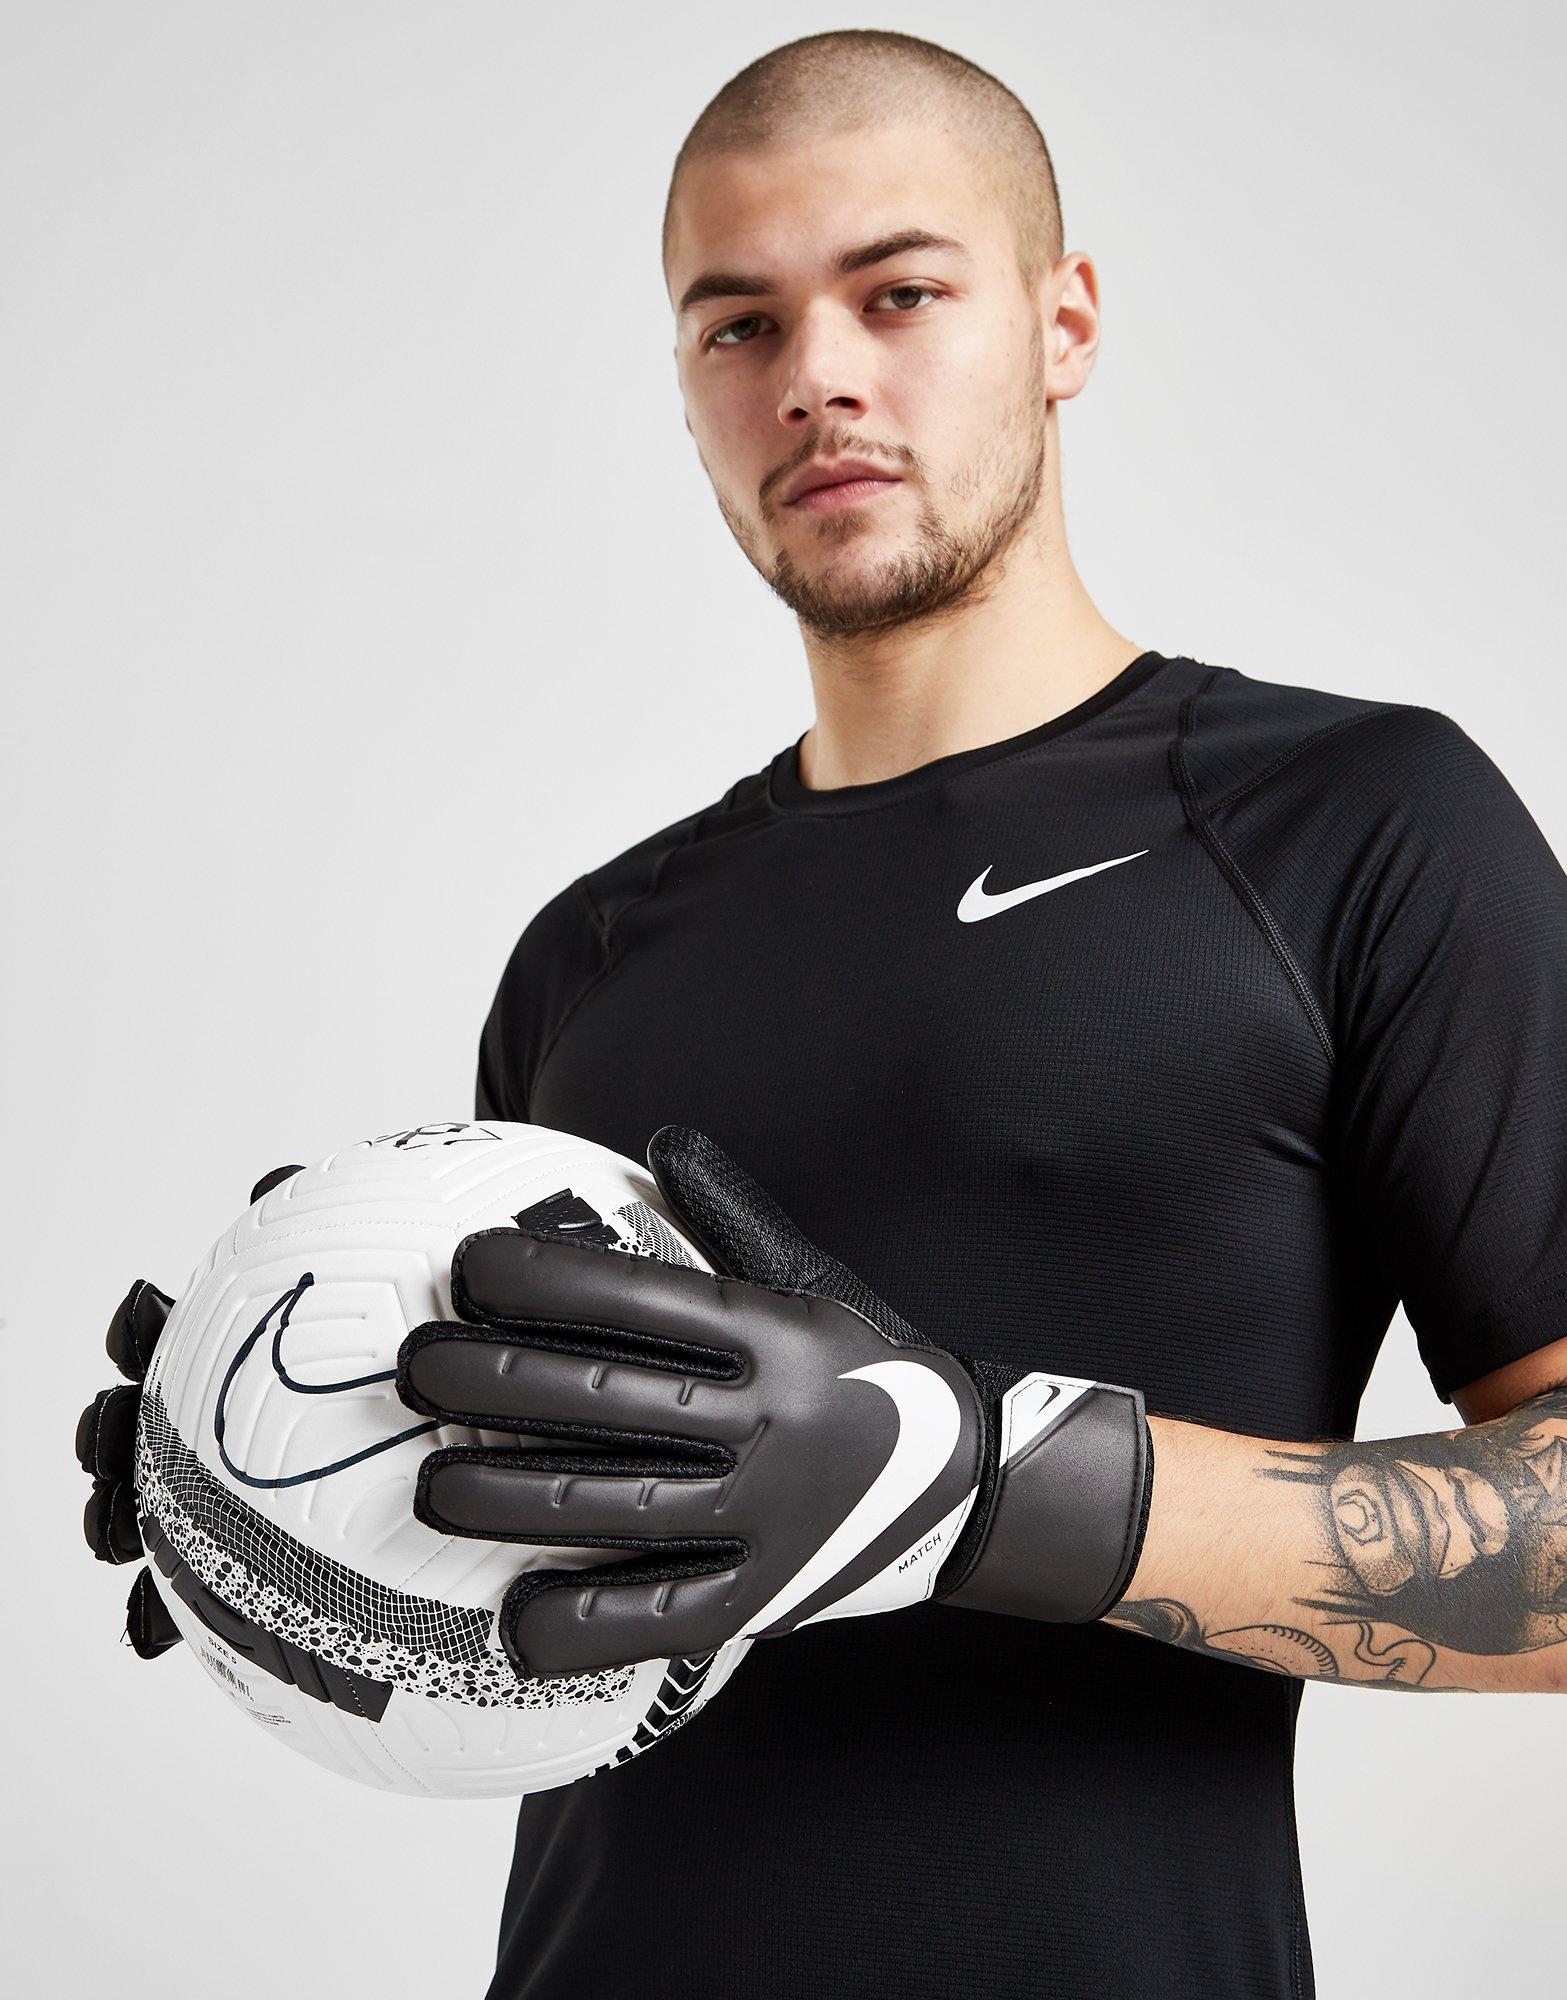 jd goalkeeper gloves